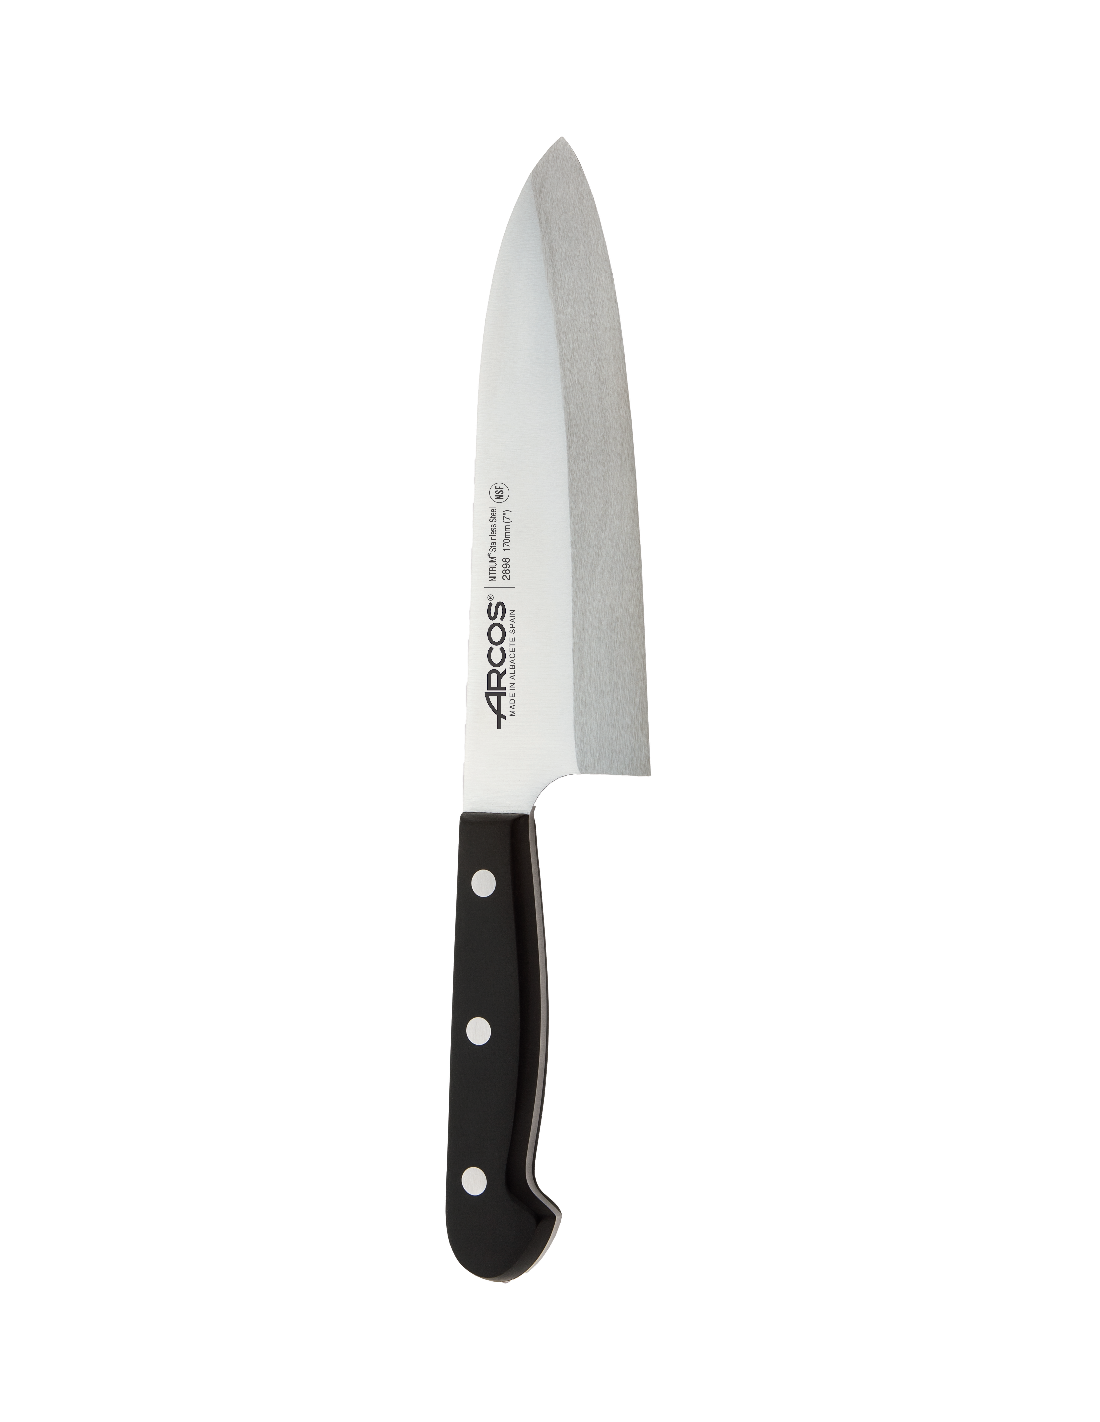 Cuchillo de cocina arcos tijera de cocina, tijeras, cuchillo., cuchillo,  arcos png